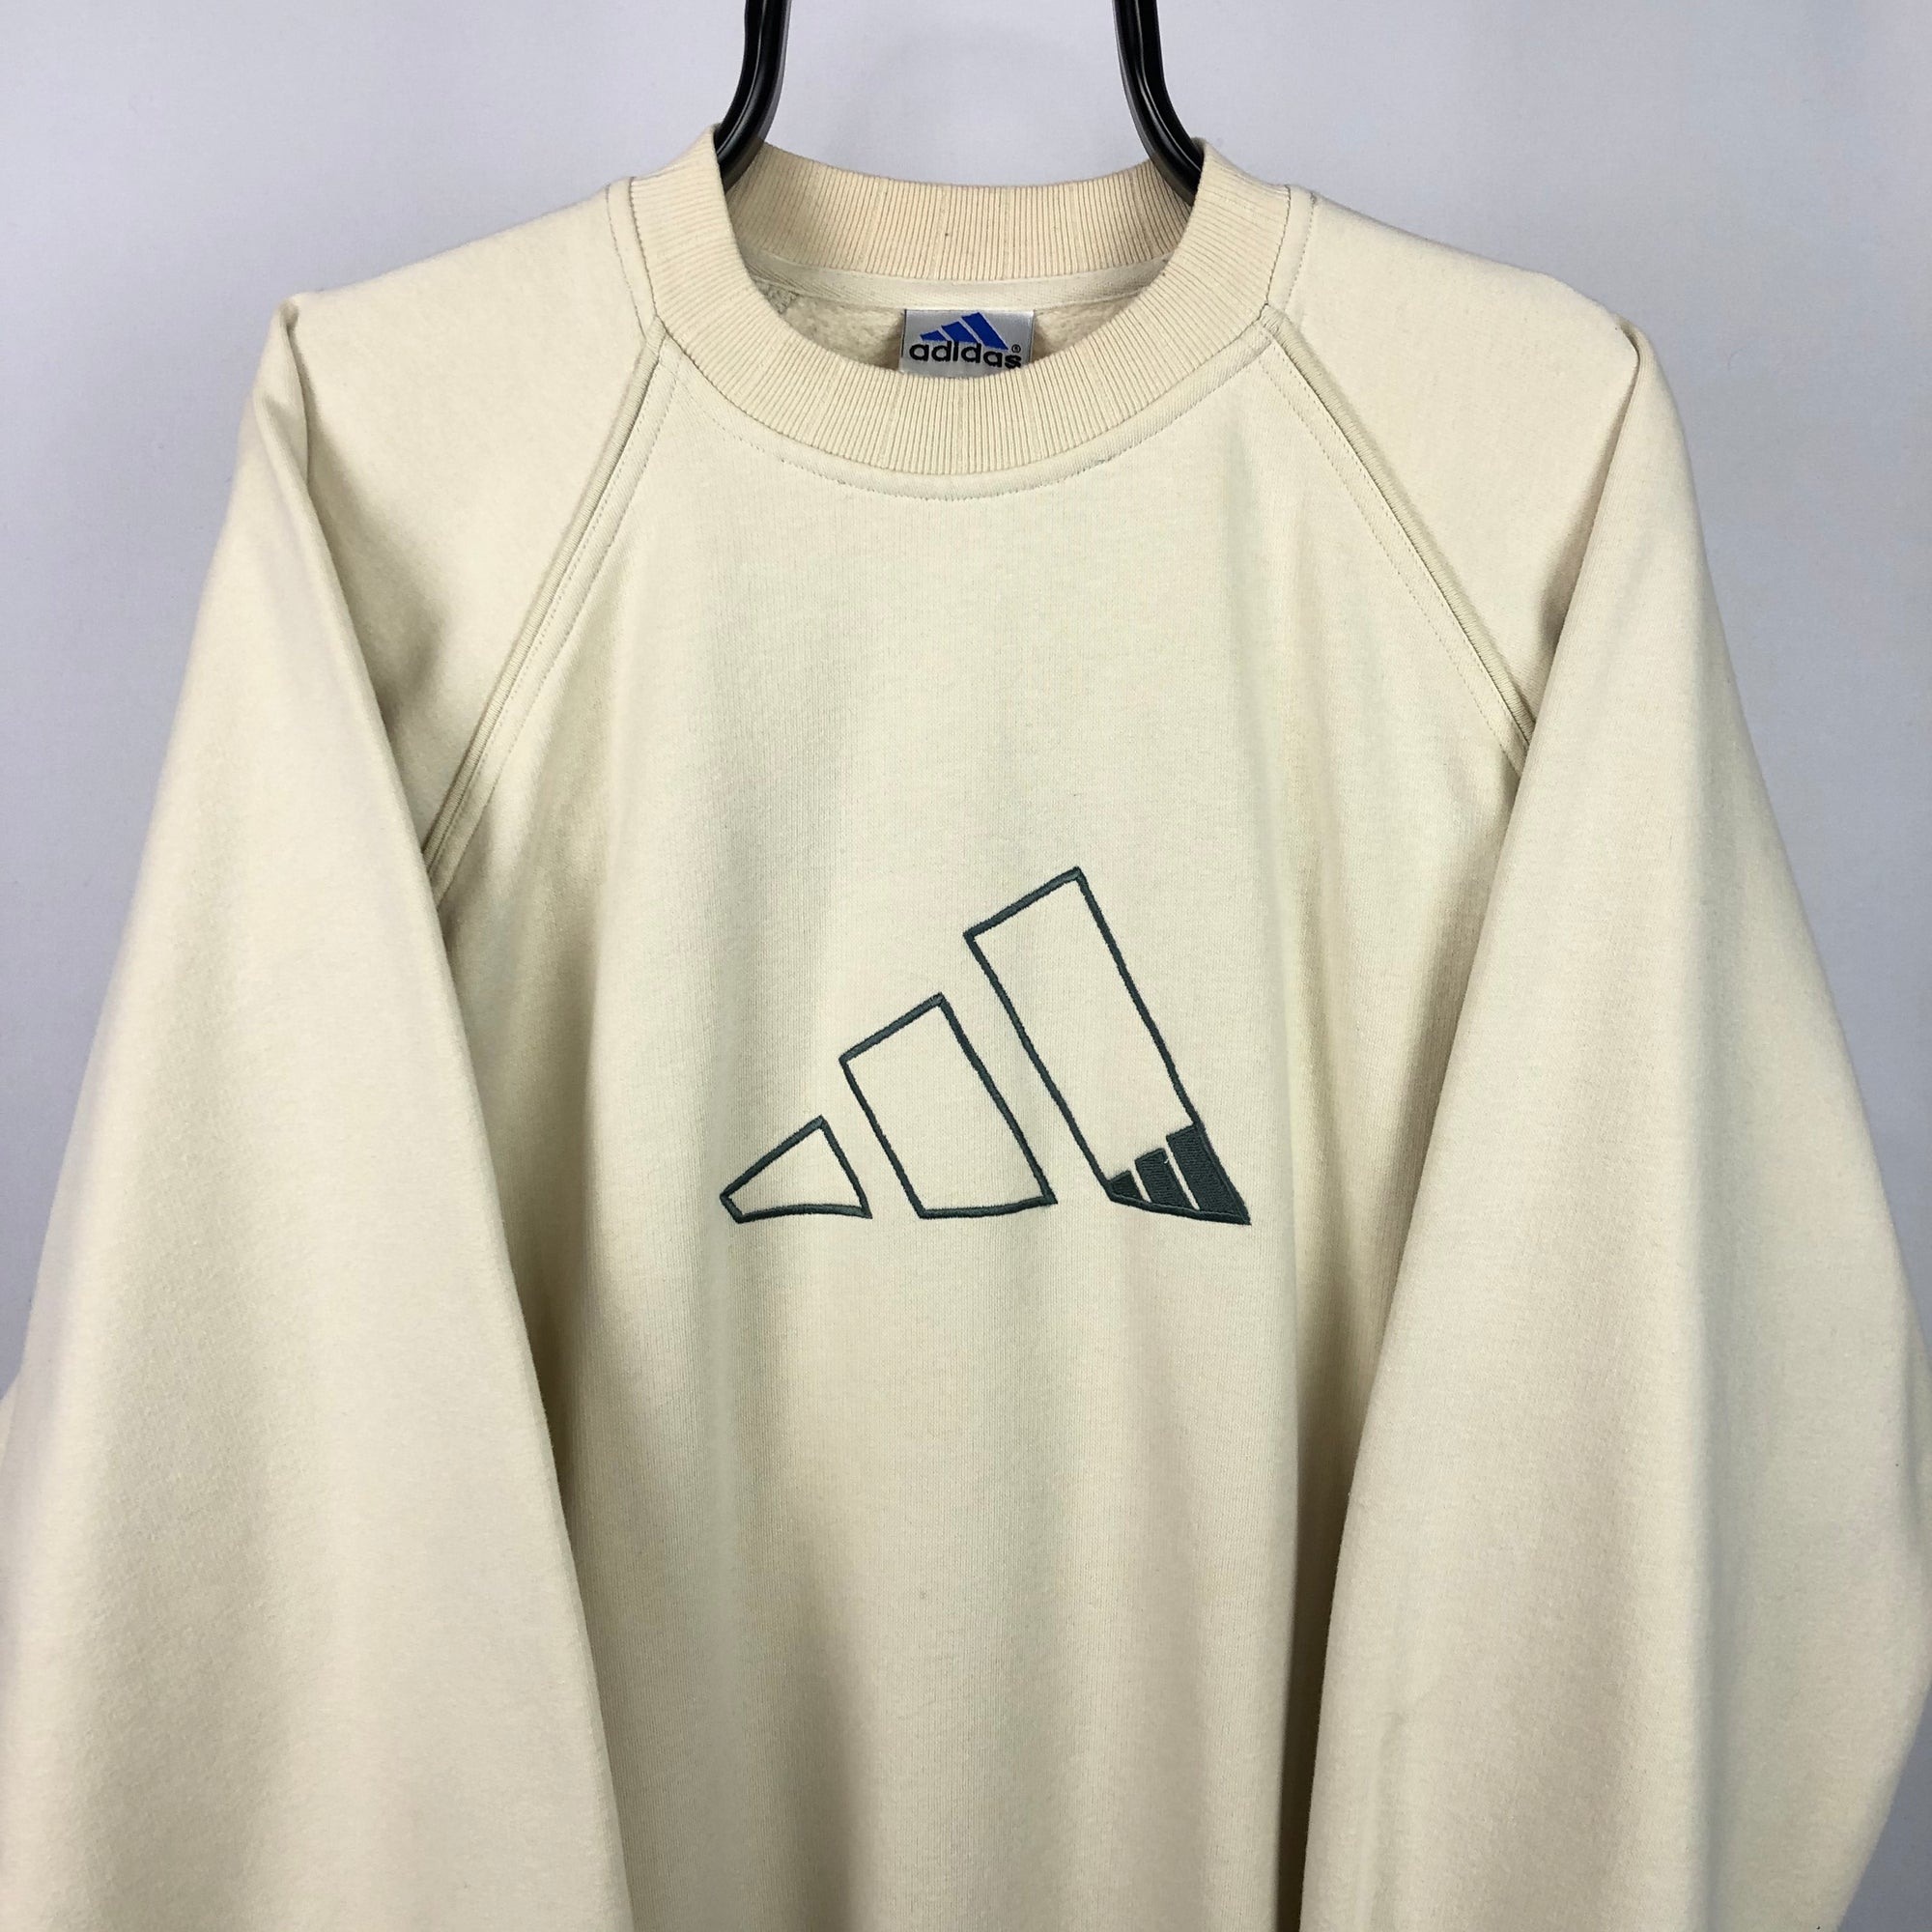 Vintage 90s Adidas Sweatshirt in Beige/Sage Green - Men's Large/Women's XL